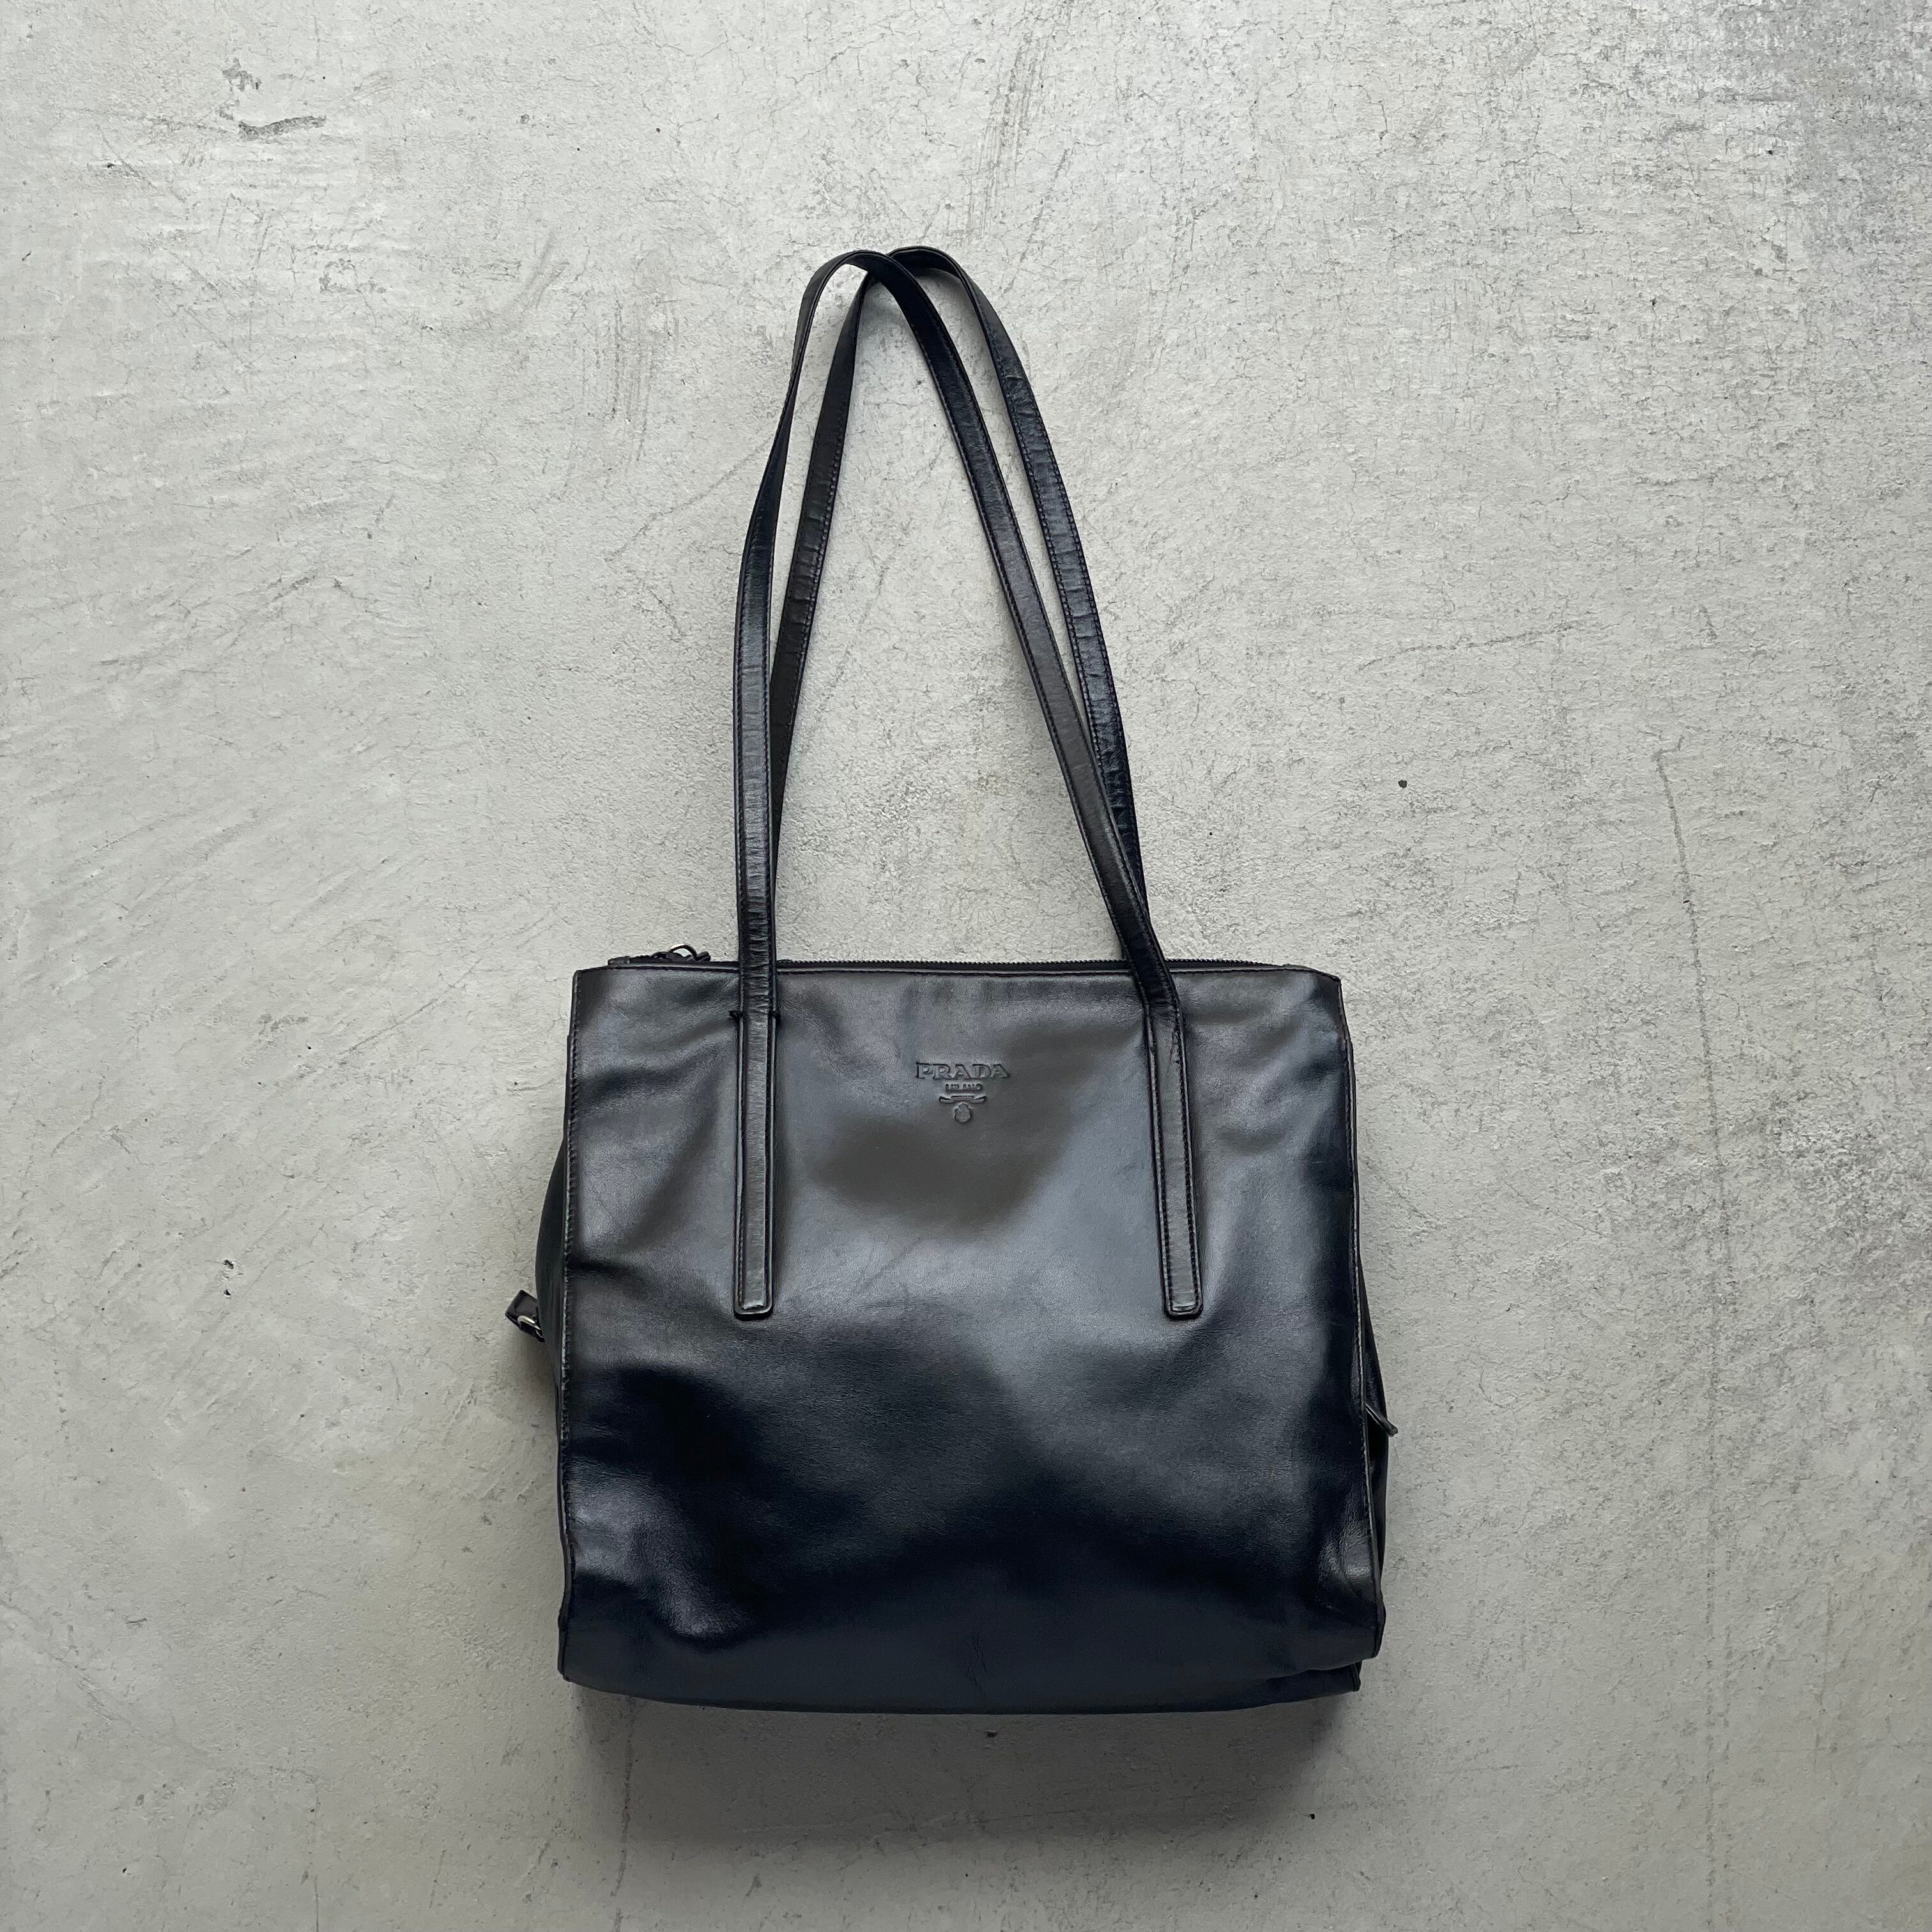 PRADA/nappa leather shoulder bag | Seek the online